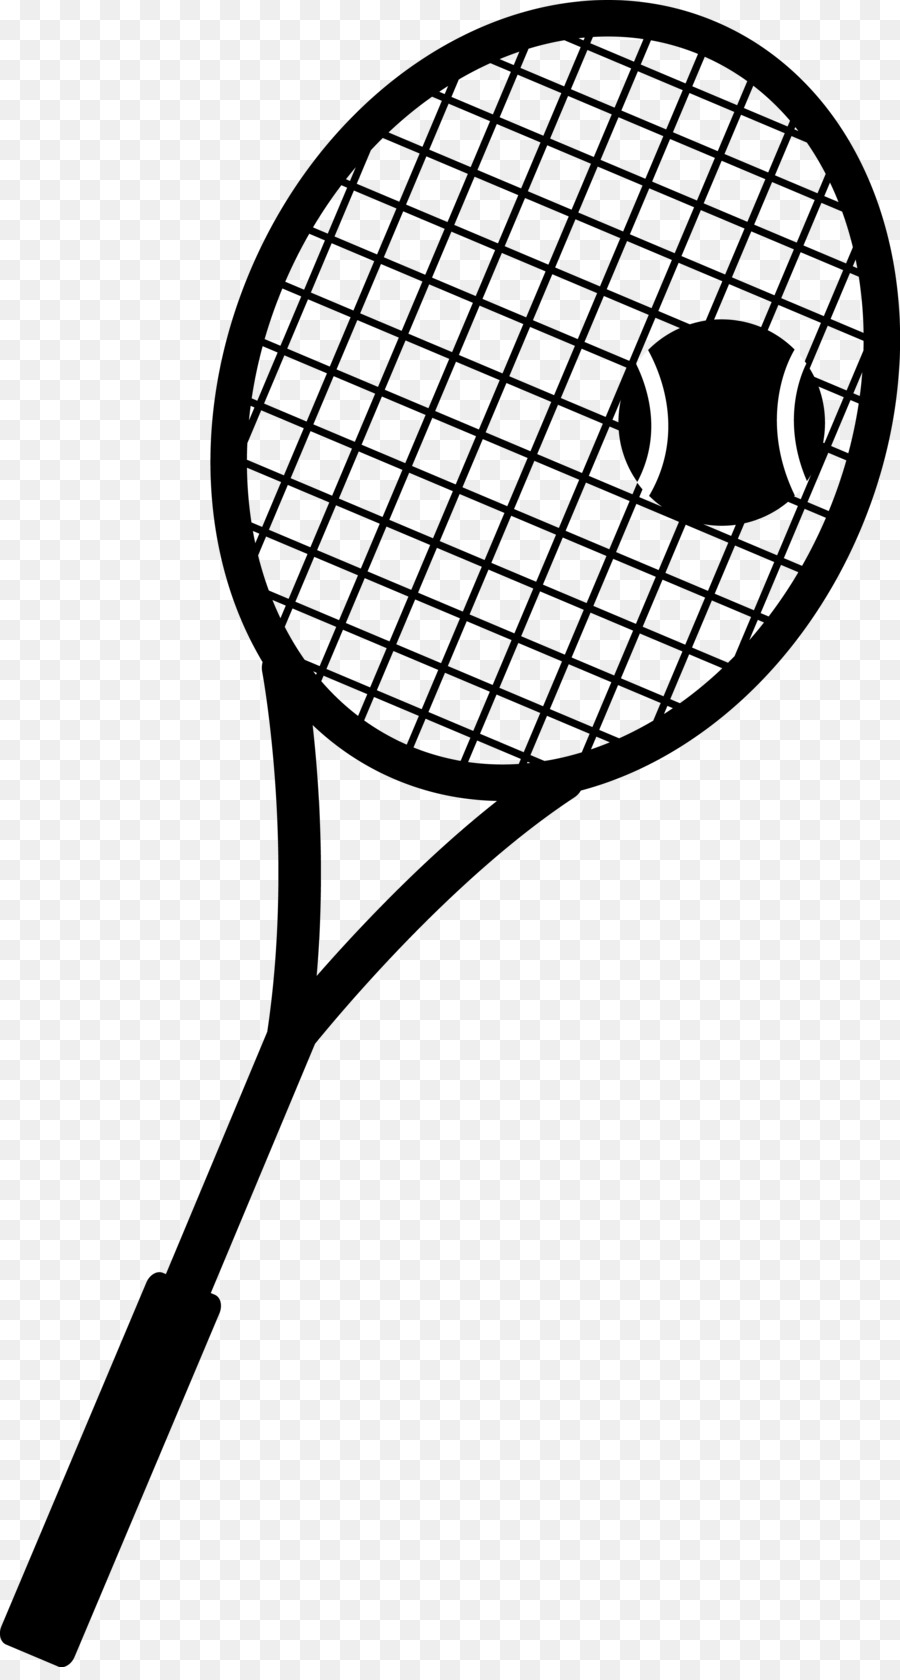 Tennis ball Racket Sport Clip art - Capabilities Cliparts png download - 3082*5707 - Free Transparent Tennis png Download.